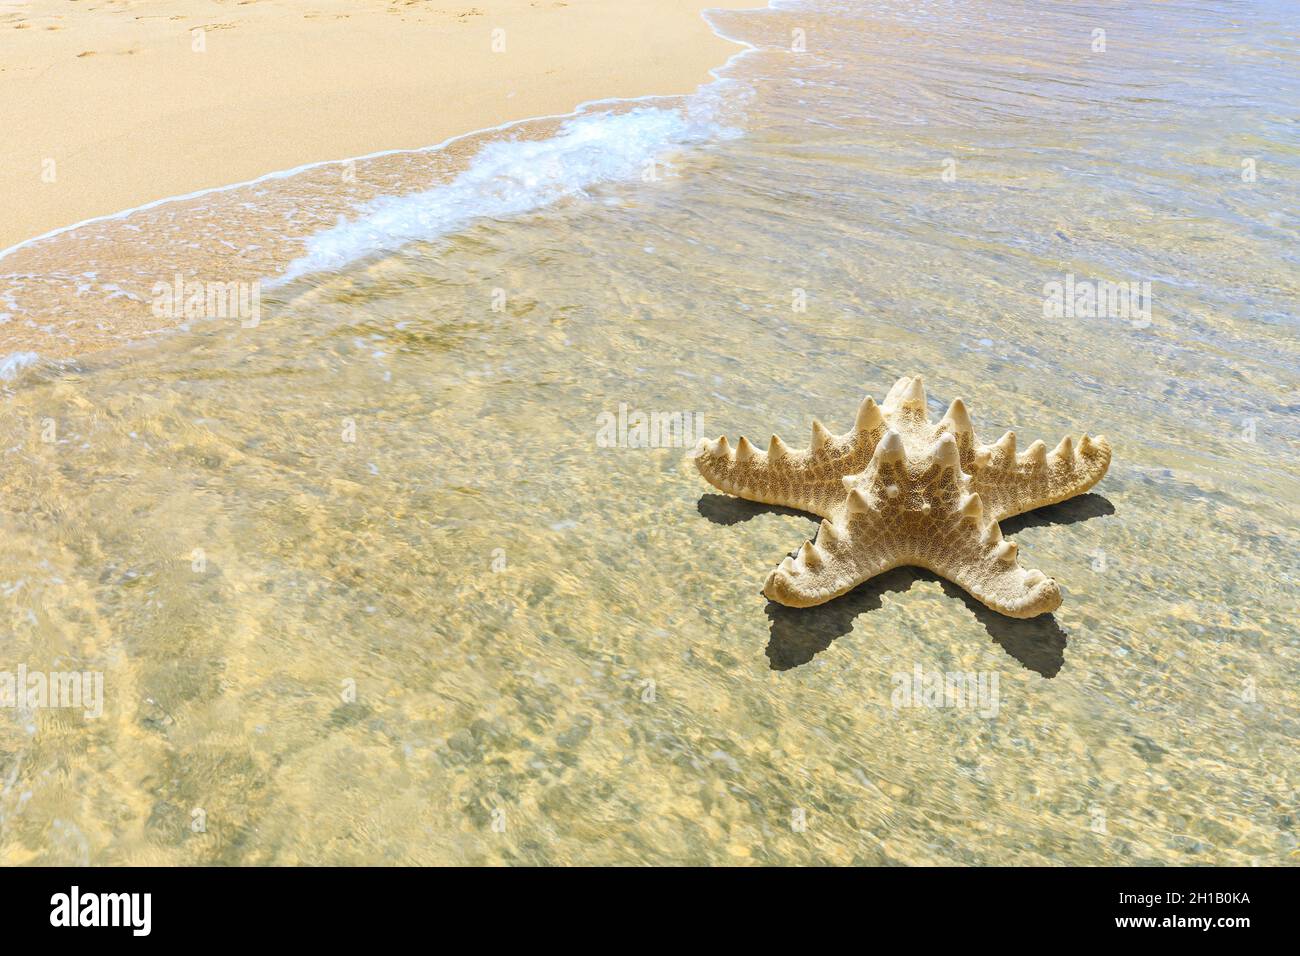 Starfish on a beach sand. Stock Photo